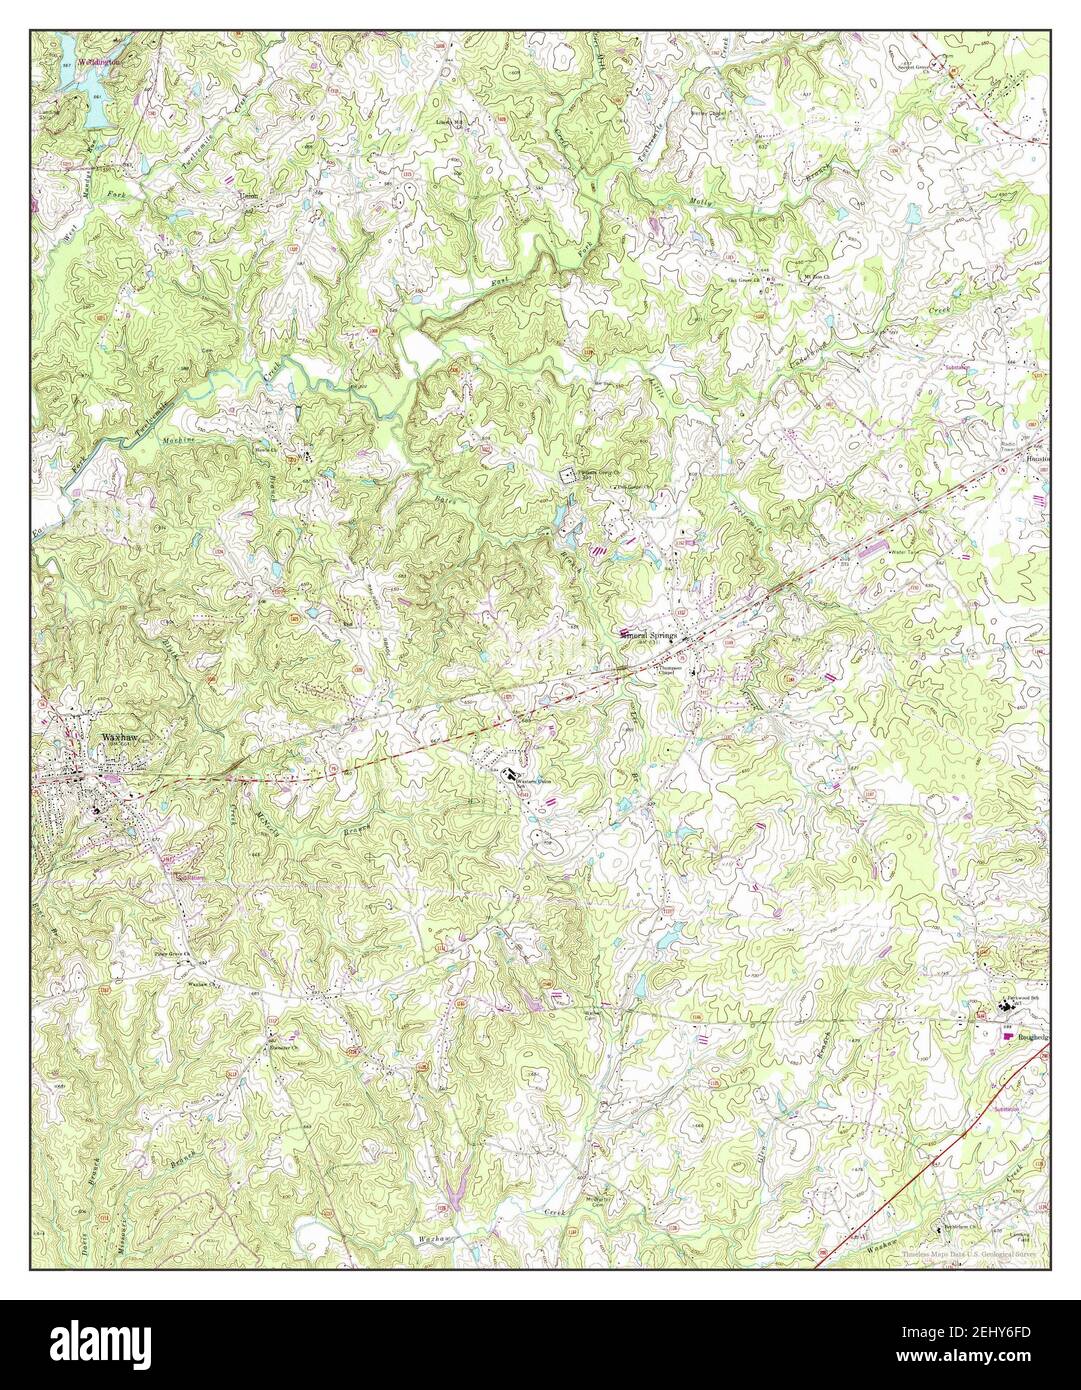 Waxhaw North Carolina Map 1970 124000 United States Of America By Timeless Maps Data Us 4315